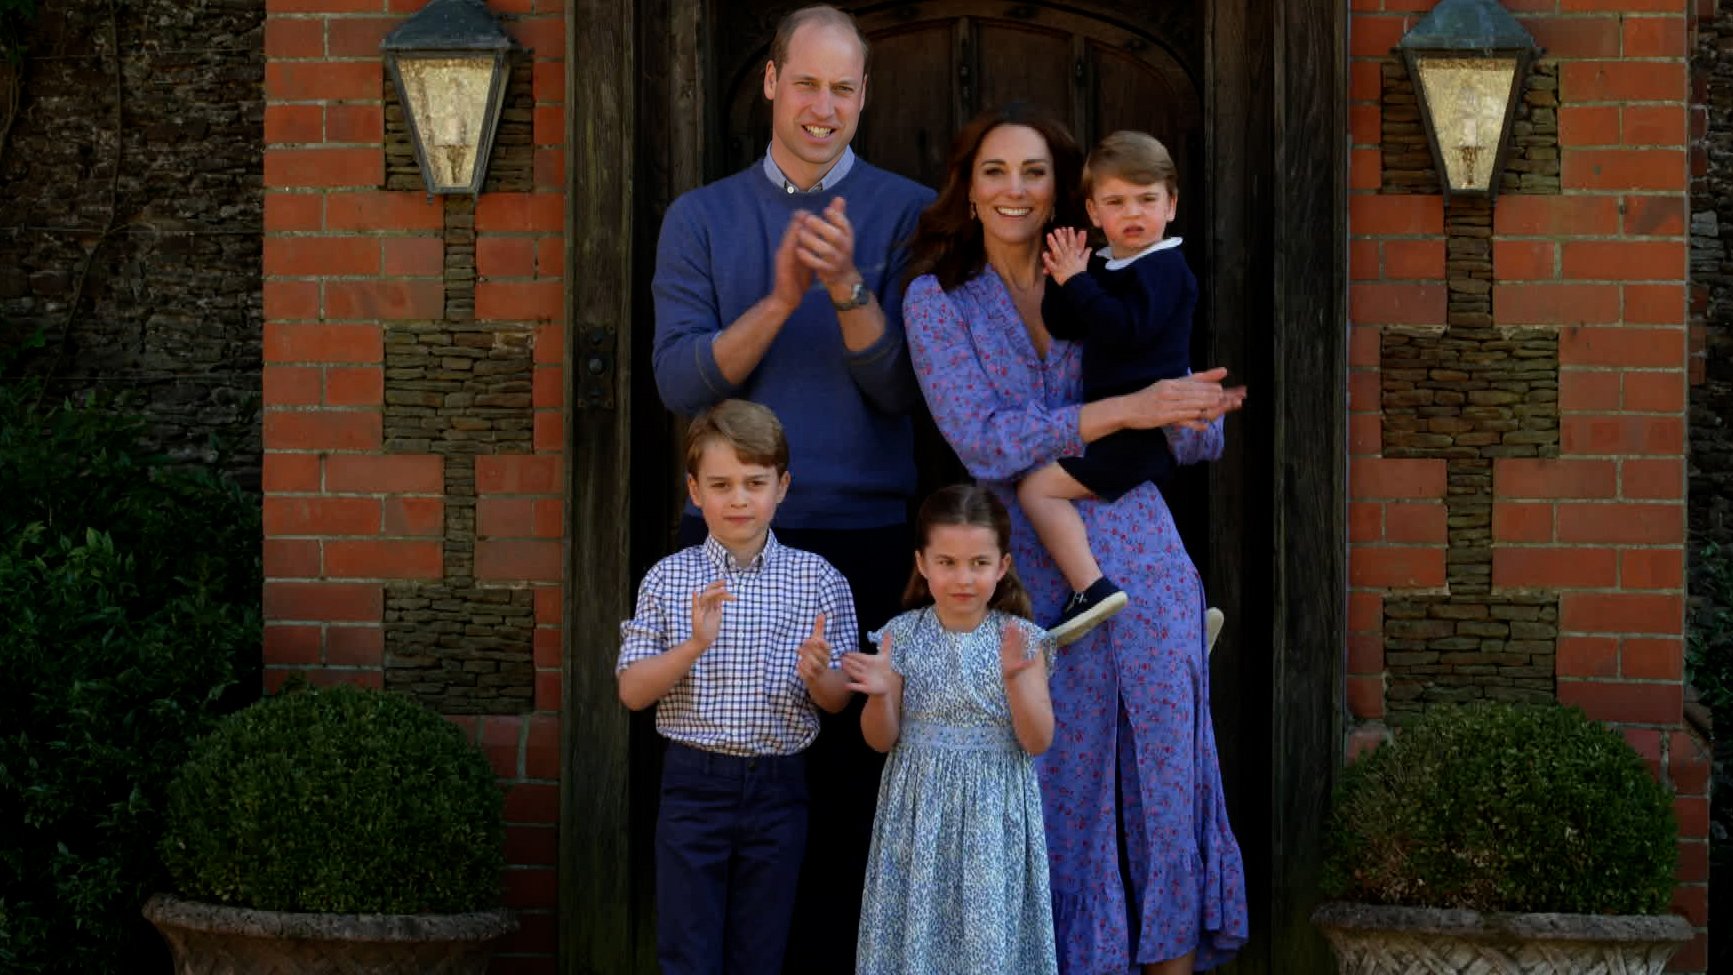  Prince William, Kate Middleton, Prince George, Princess Charlotte, and Prince Louis